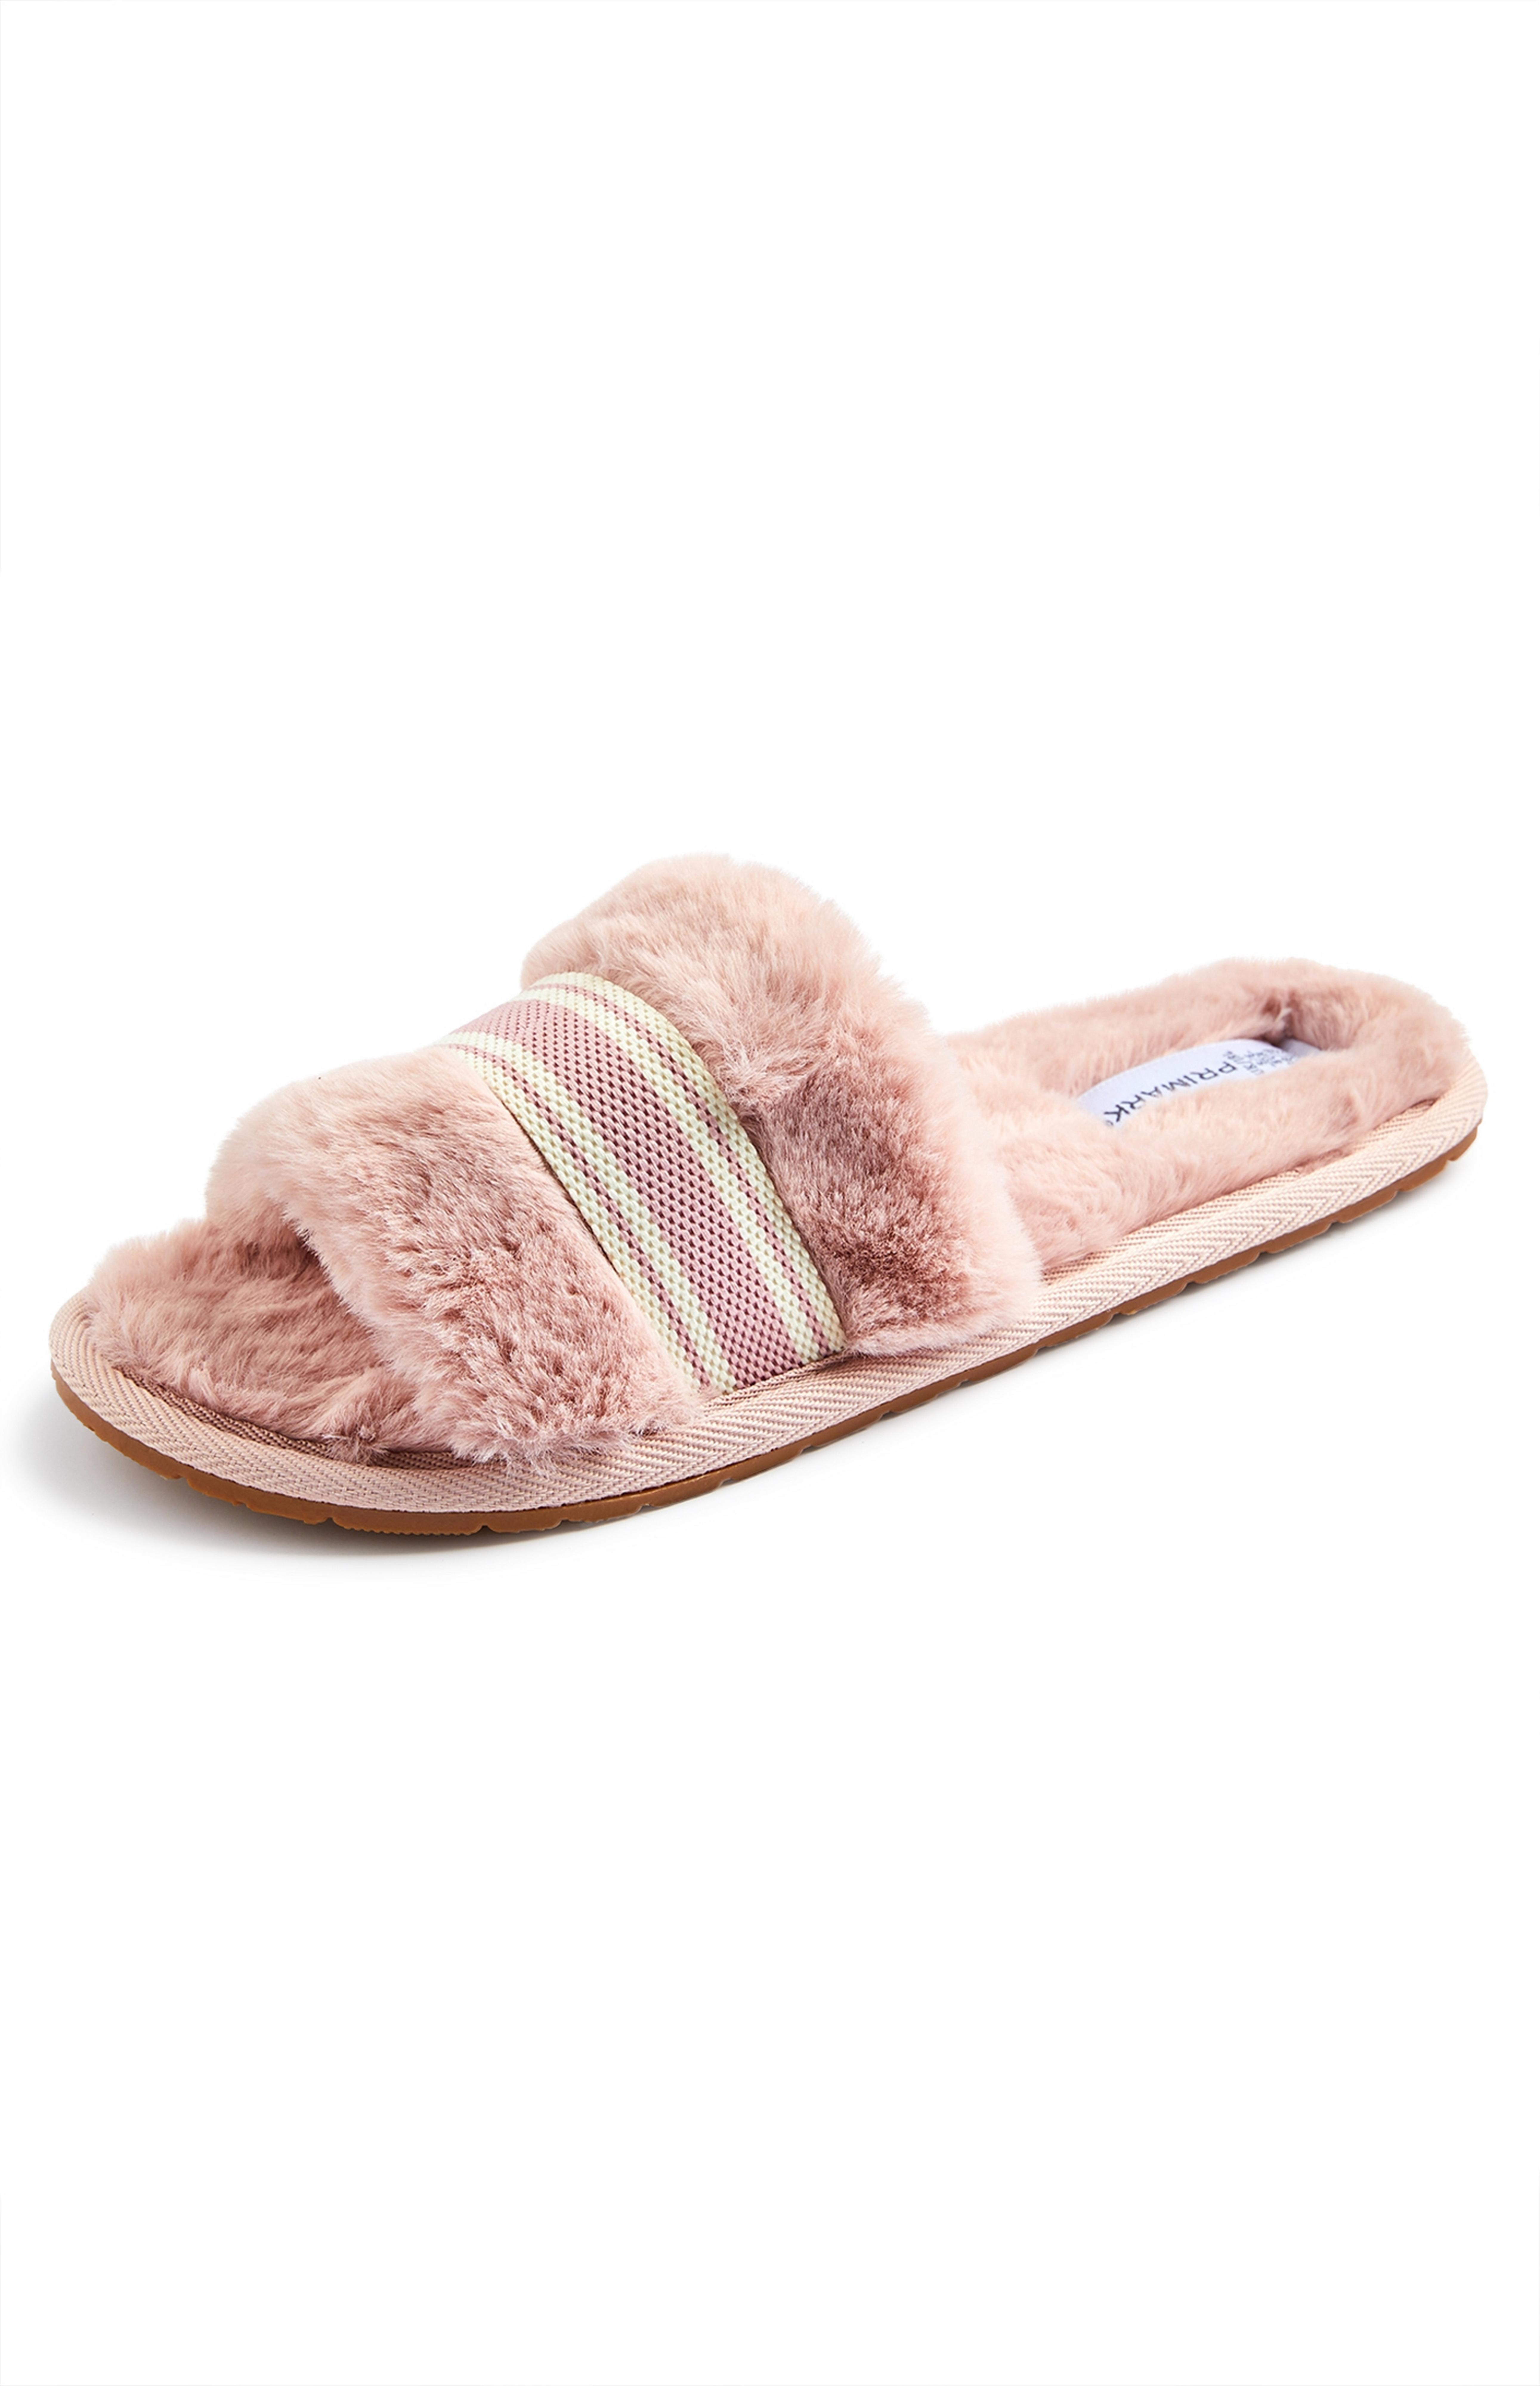 pink fluffy slippers primark